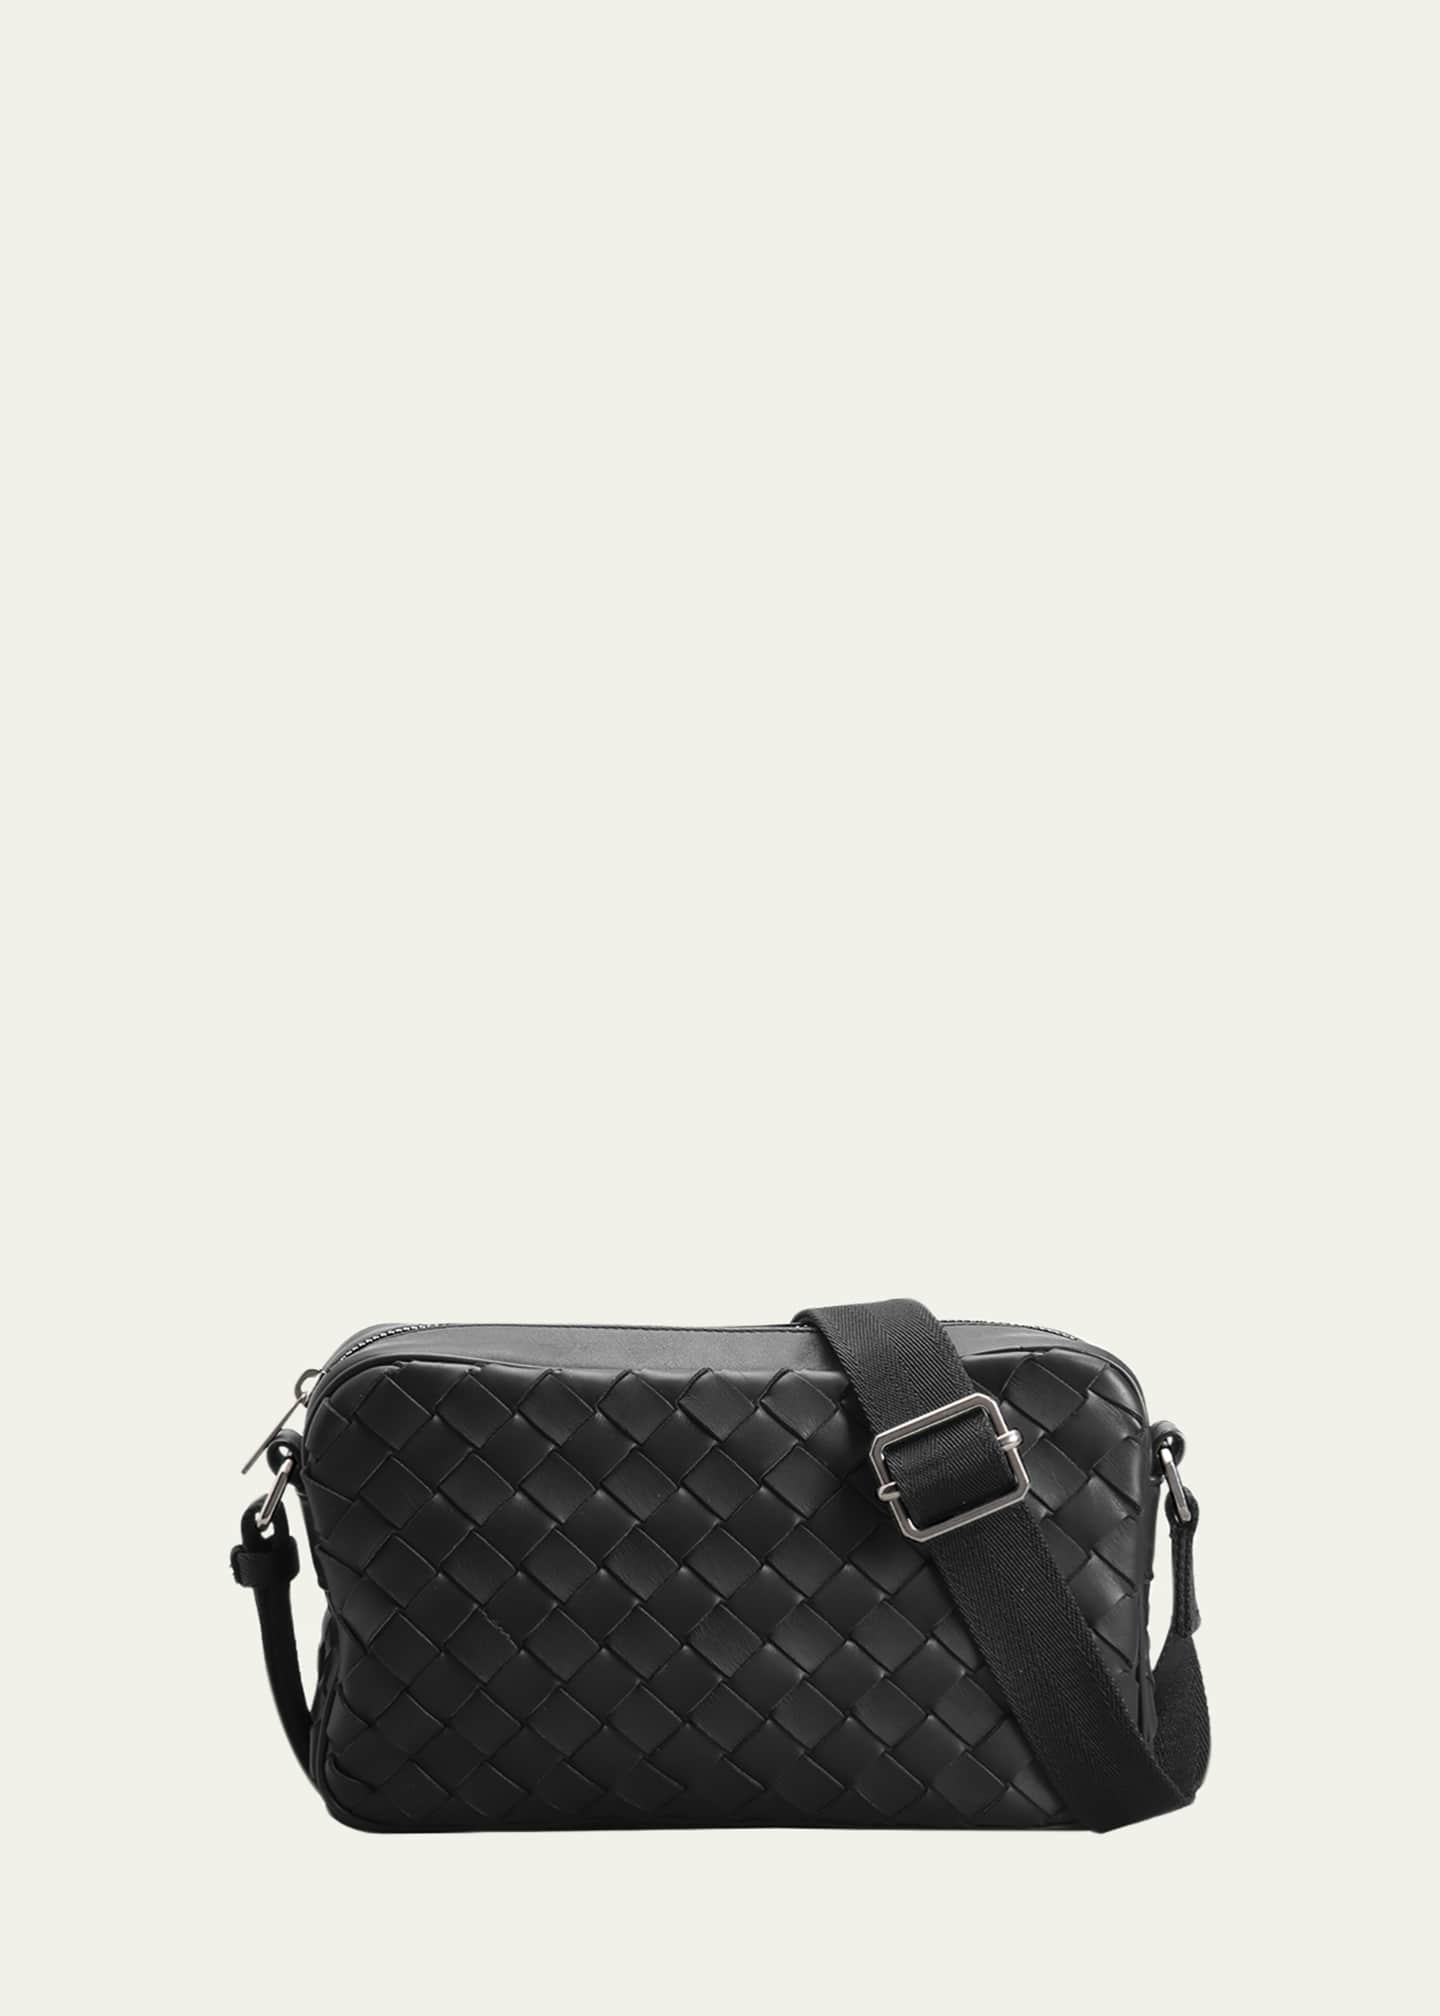 Bottega Veneta Men's Intrecciato Leather Messenger Bag